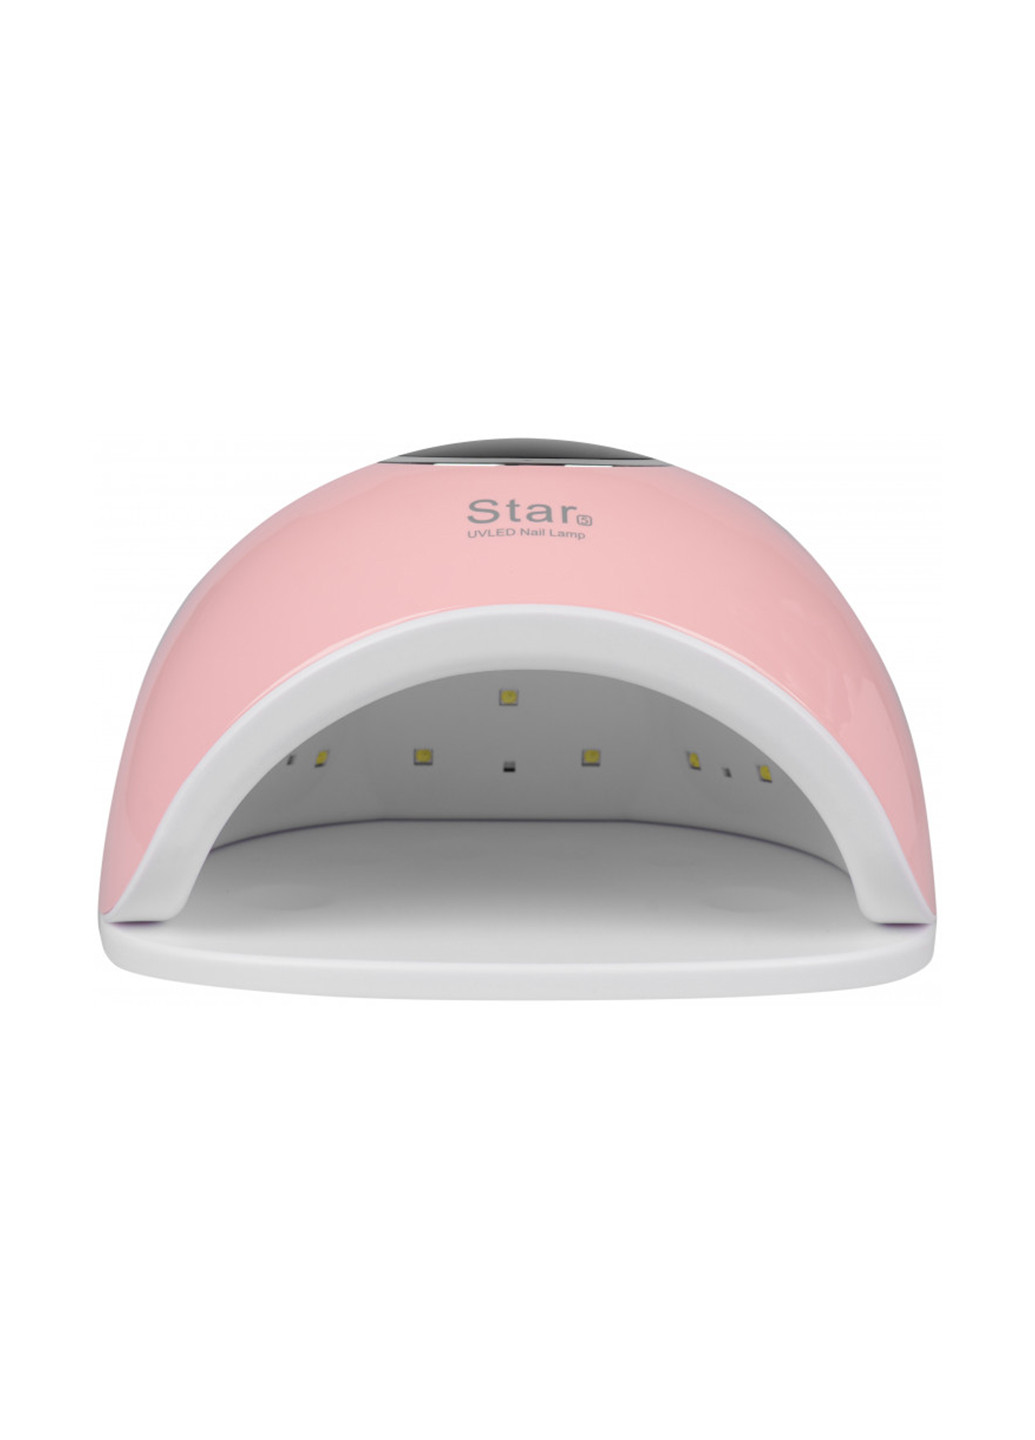 LED лампа STAR548_PINK Sun sunstar548_pink (150129504)